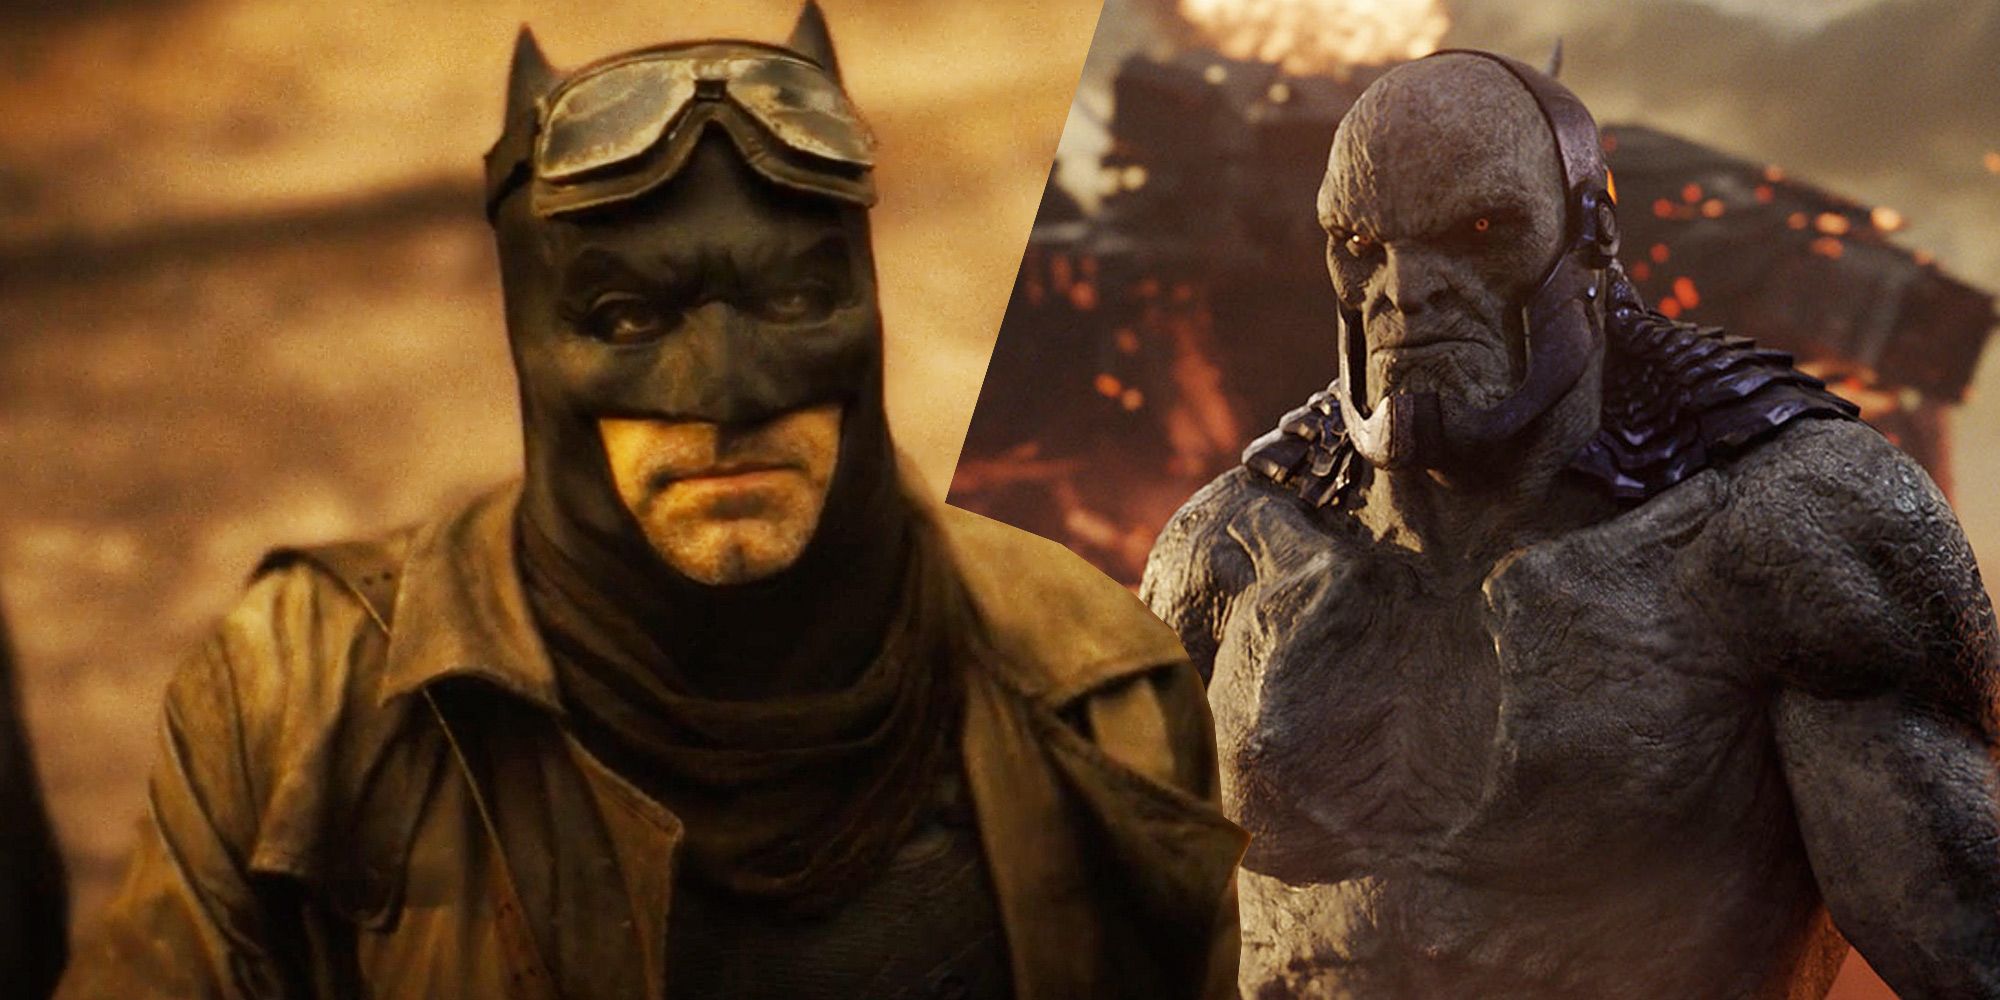 Ben Affleck as Batman and Darkseid in Zack Snyder's Justice League